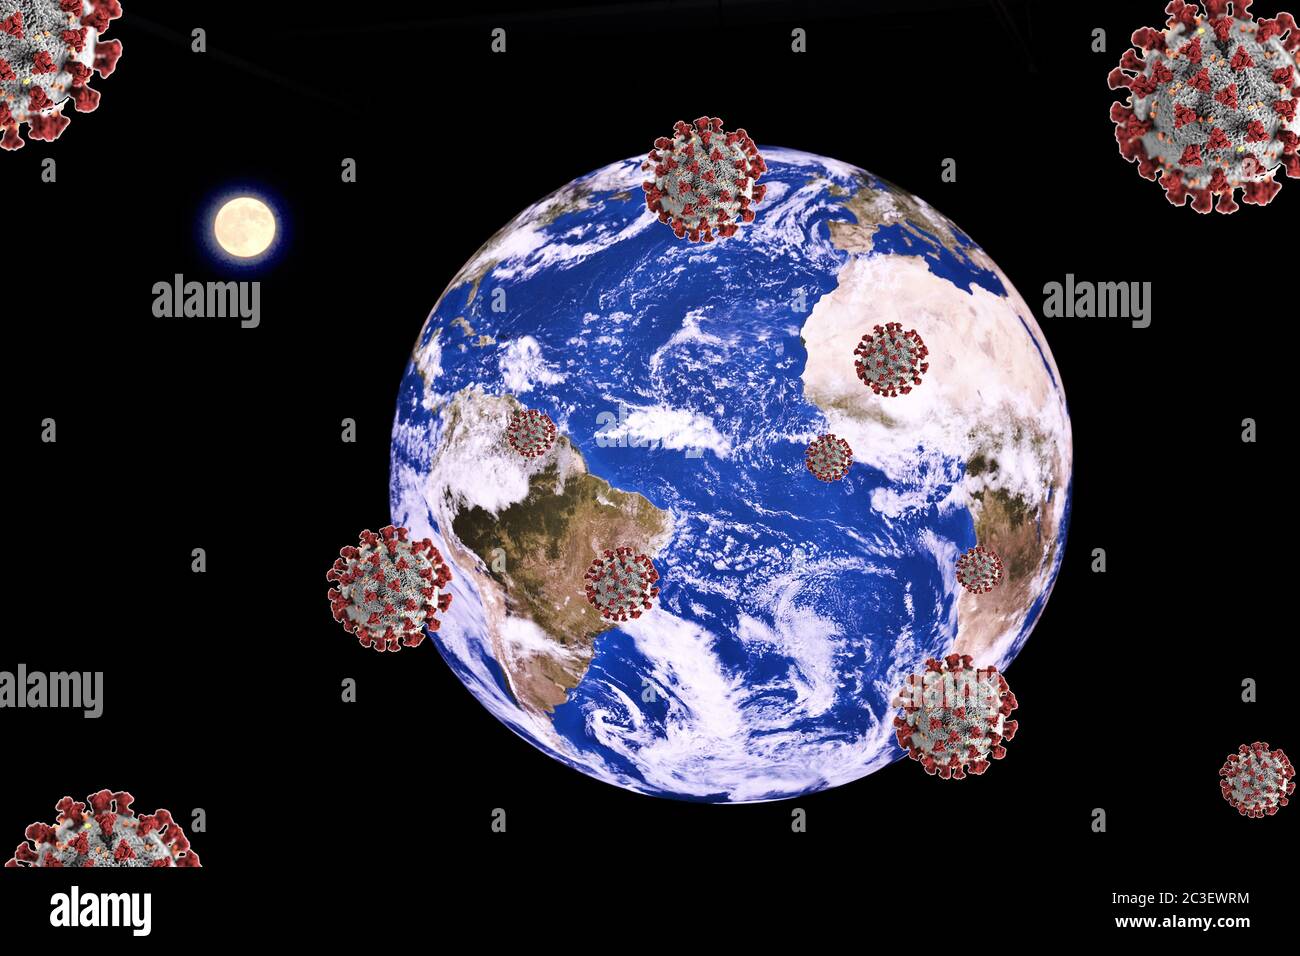 Attack on earth with corona viruses, photomantage, symbol image for the global corona pandemic Stock Photo